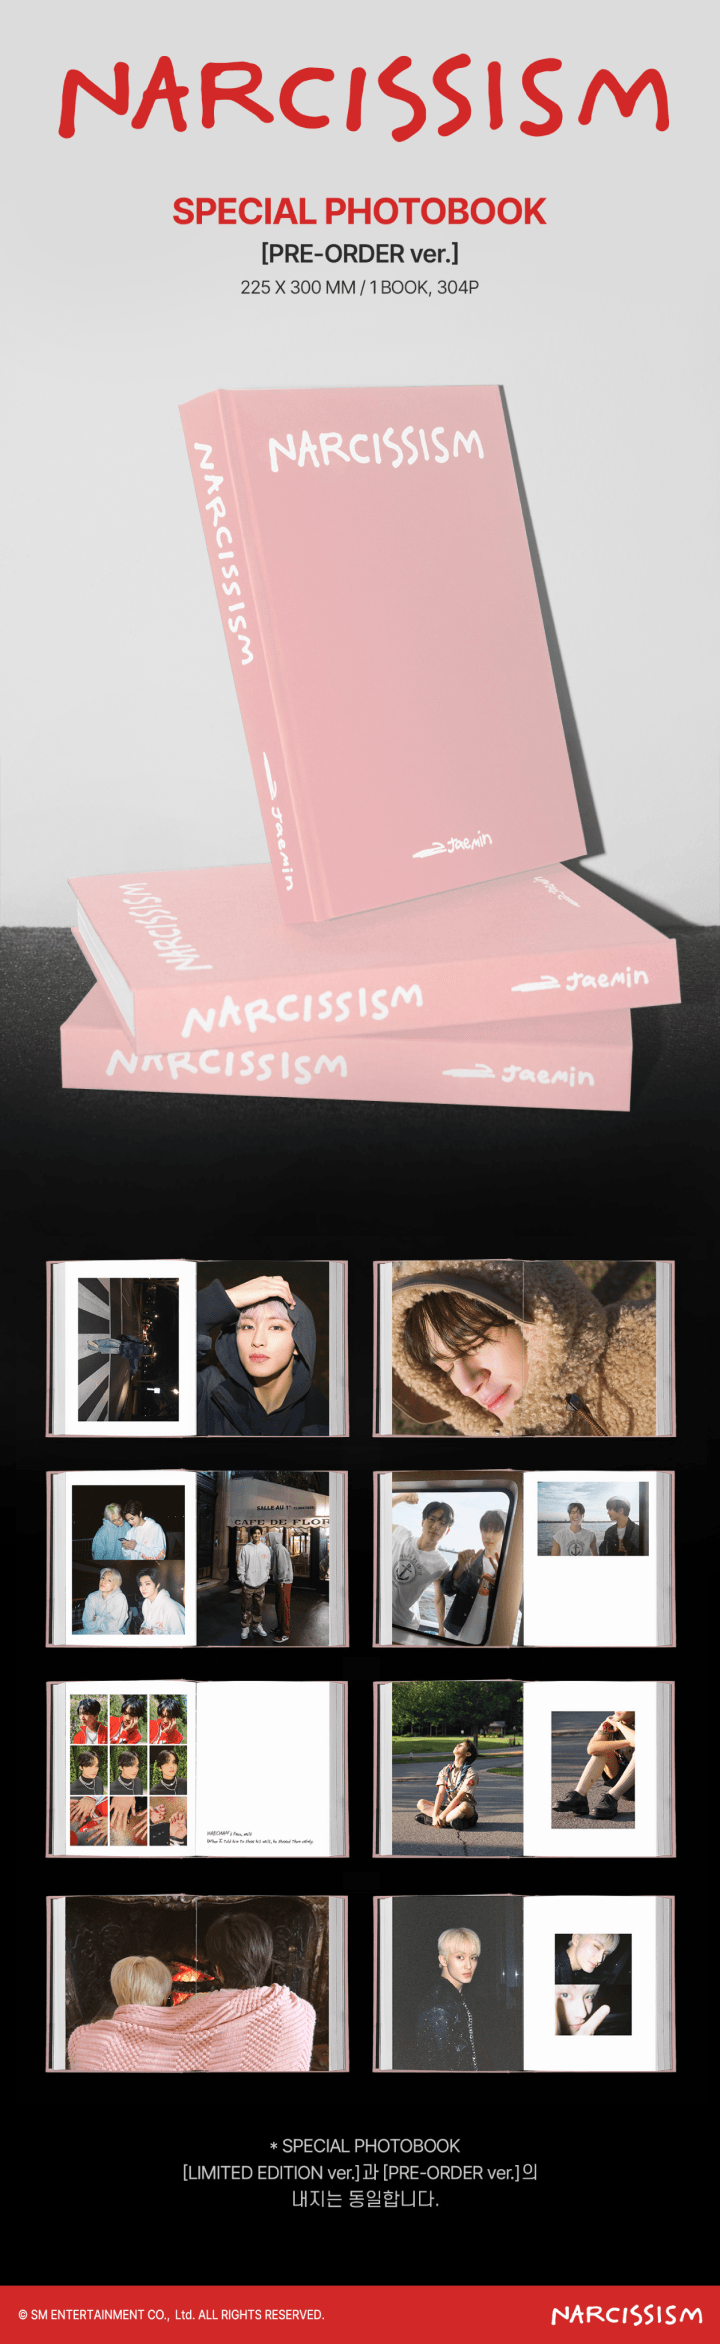 [PRE-ORDER] NARCISSISM : JAEMIN 1st PHOTO EXHIBITION - SPECIAL PHOTOBOOK (PRE-ORDER ver.)